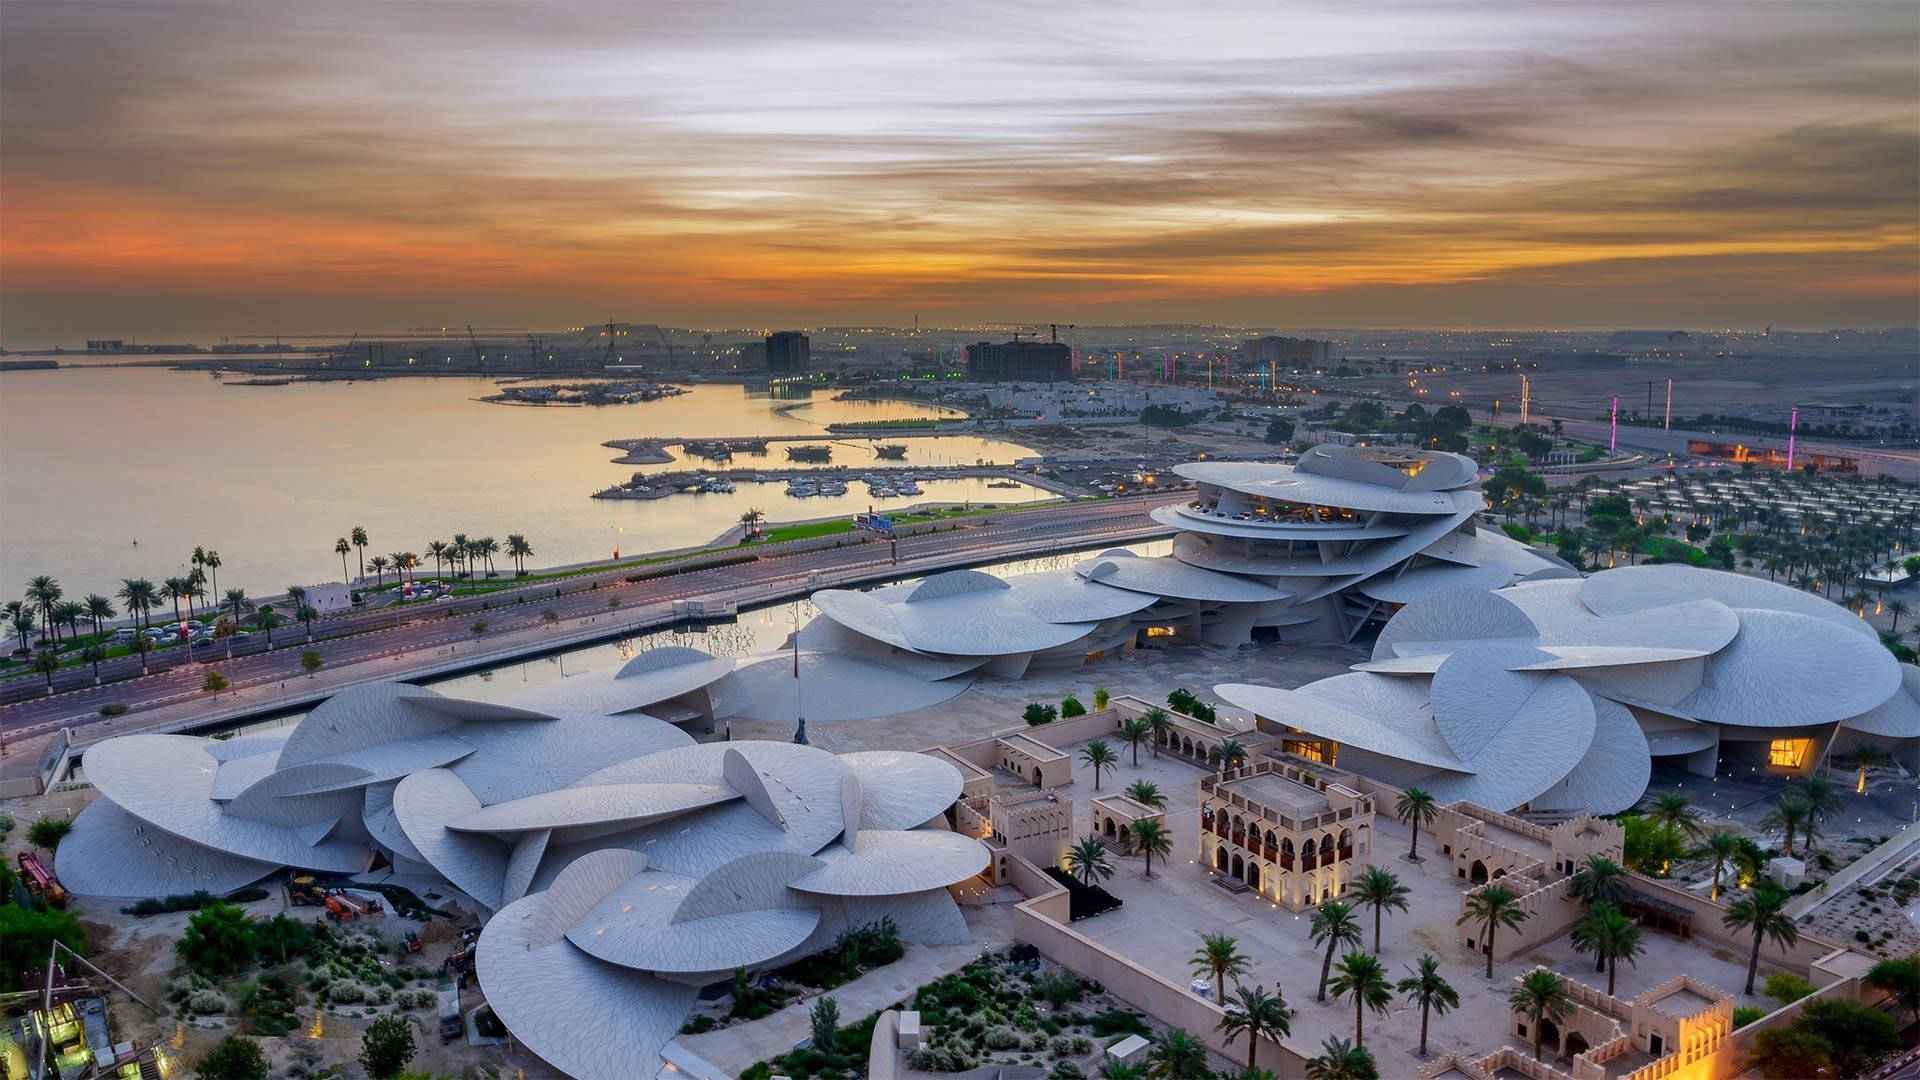 Grandeur View Of Qatar's Architecture